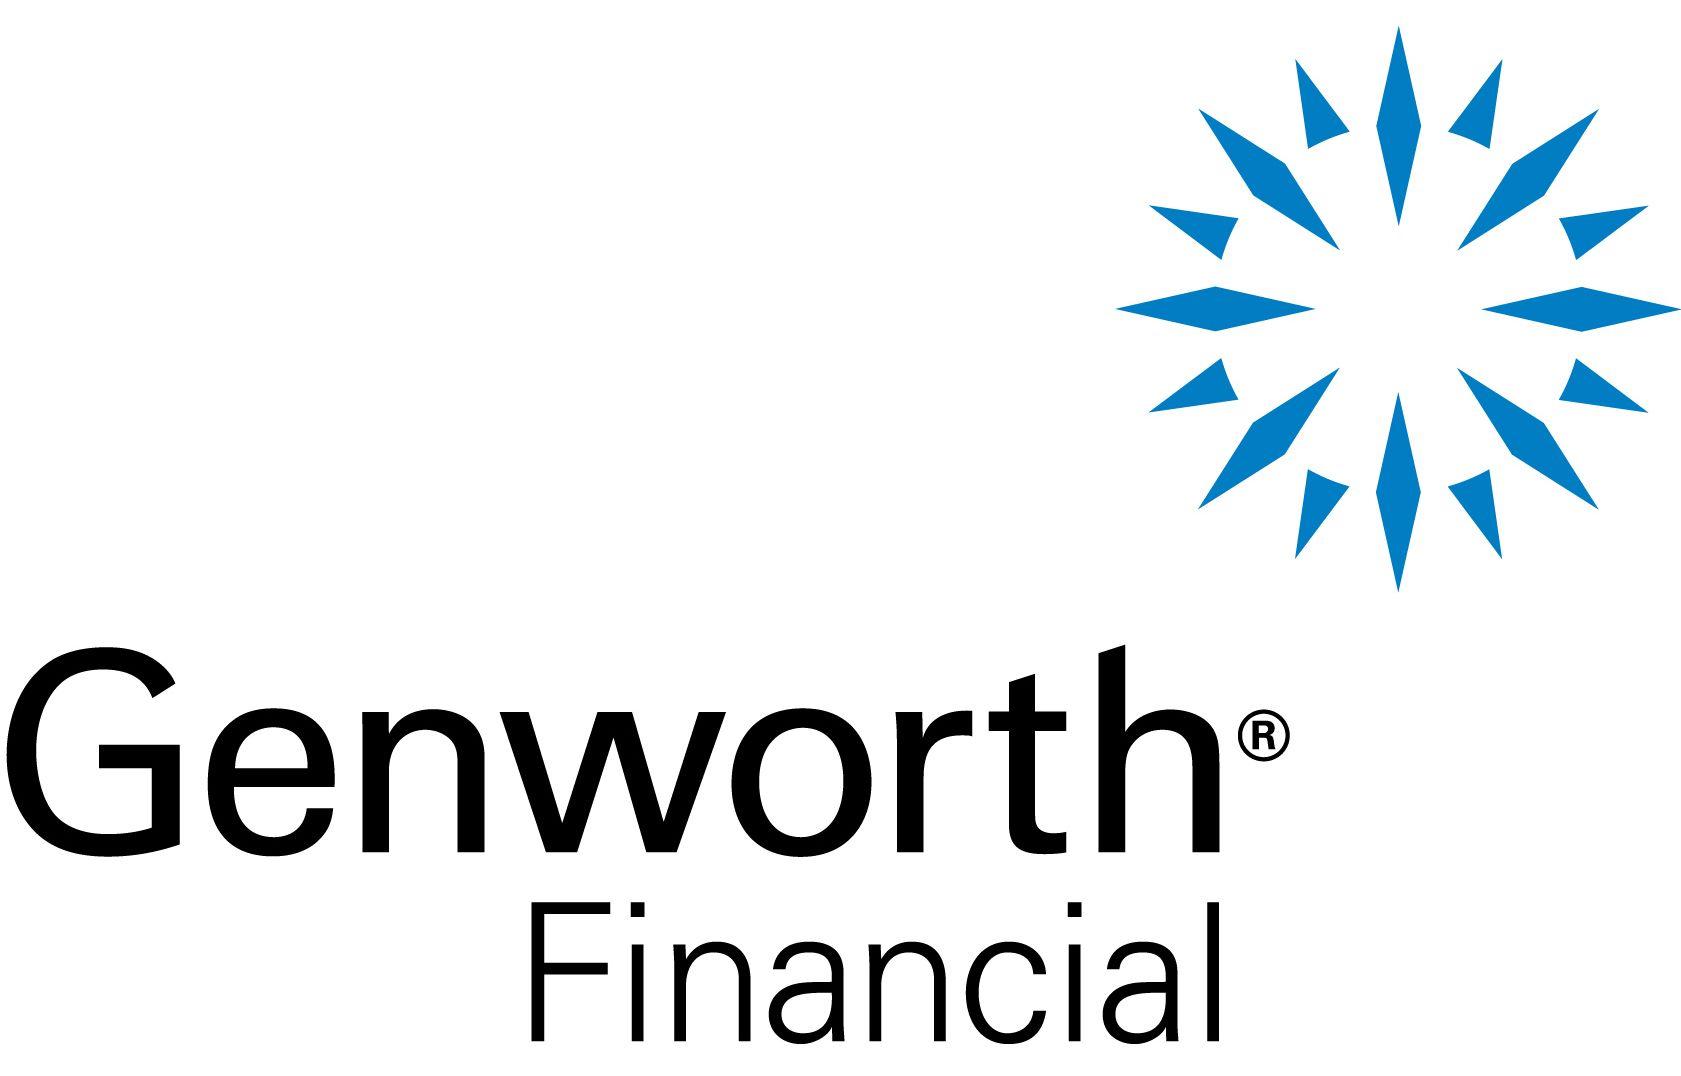 Genworth Financial Logo - American Independent Marketinggenworth Independent Marketing